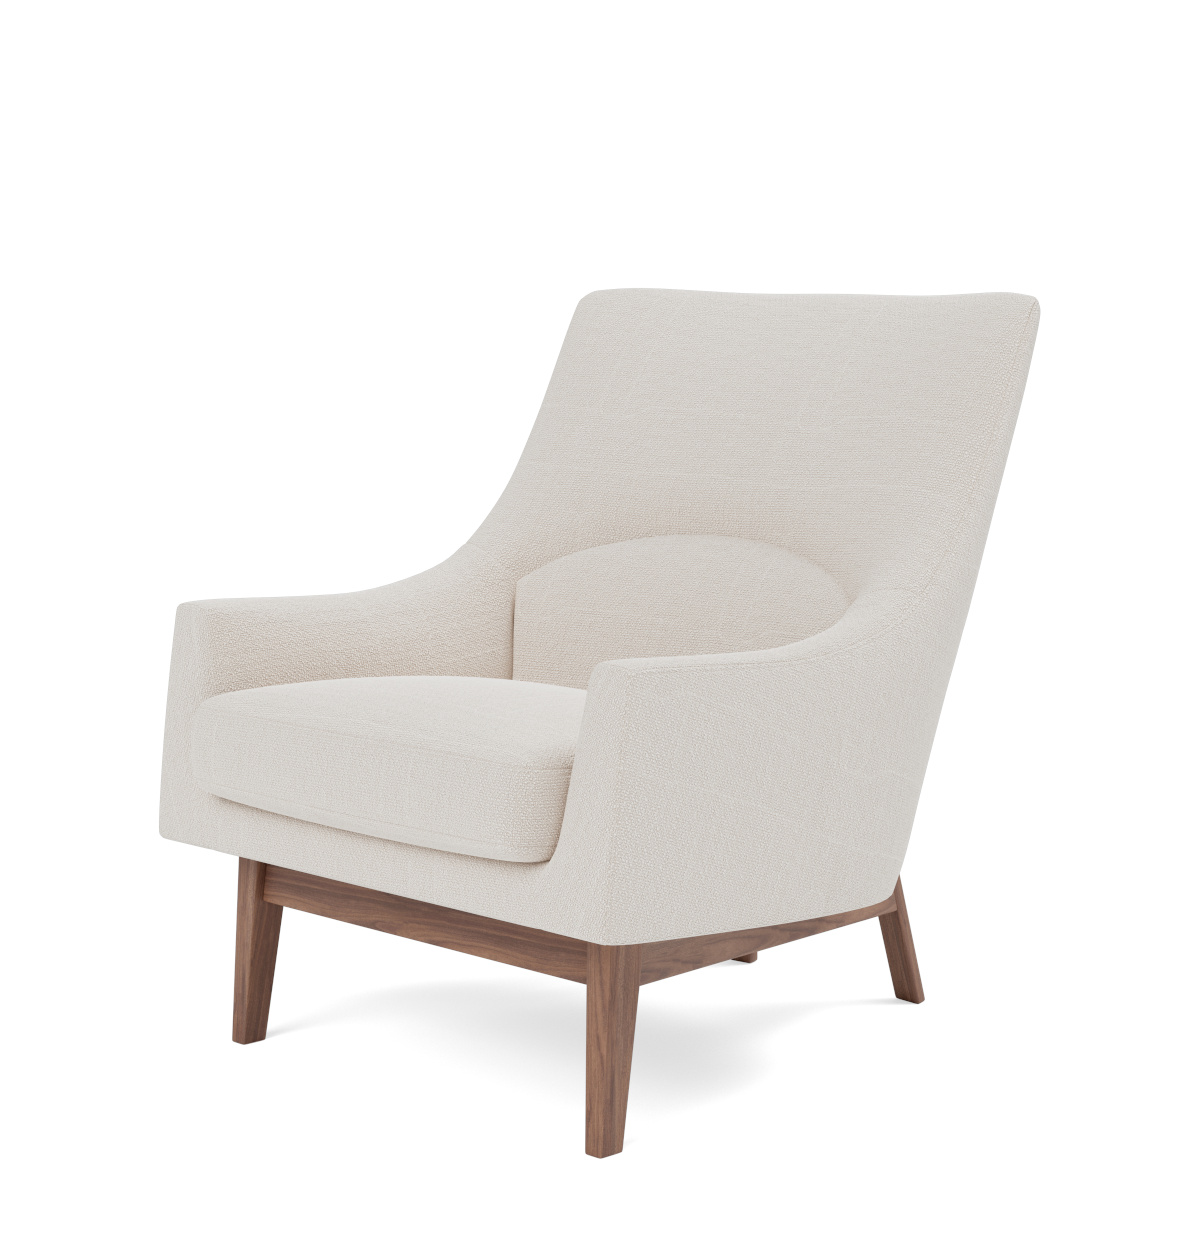 A-Chair Wood Base, walnuss lackiert / re-wool 198